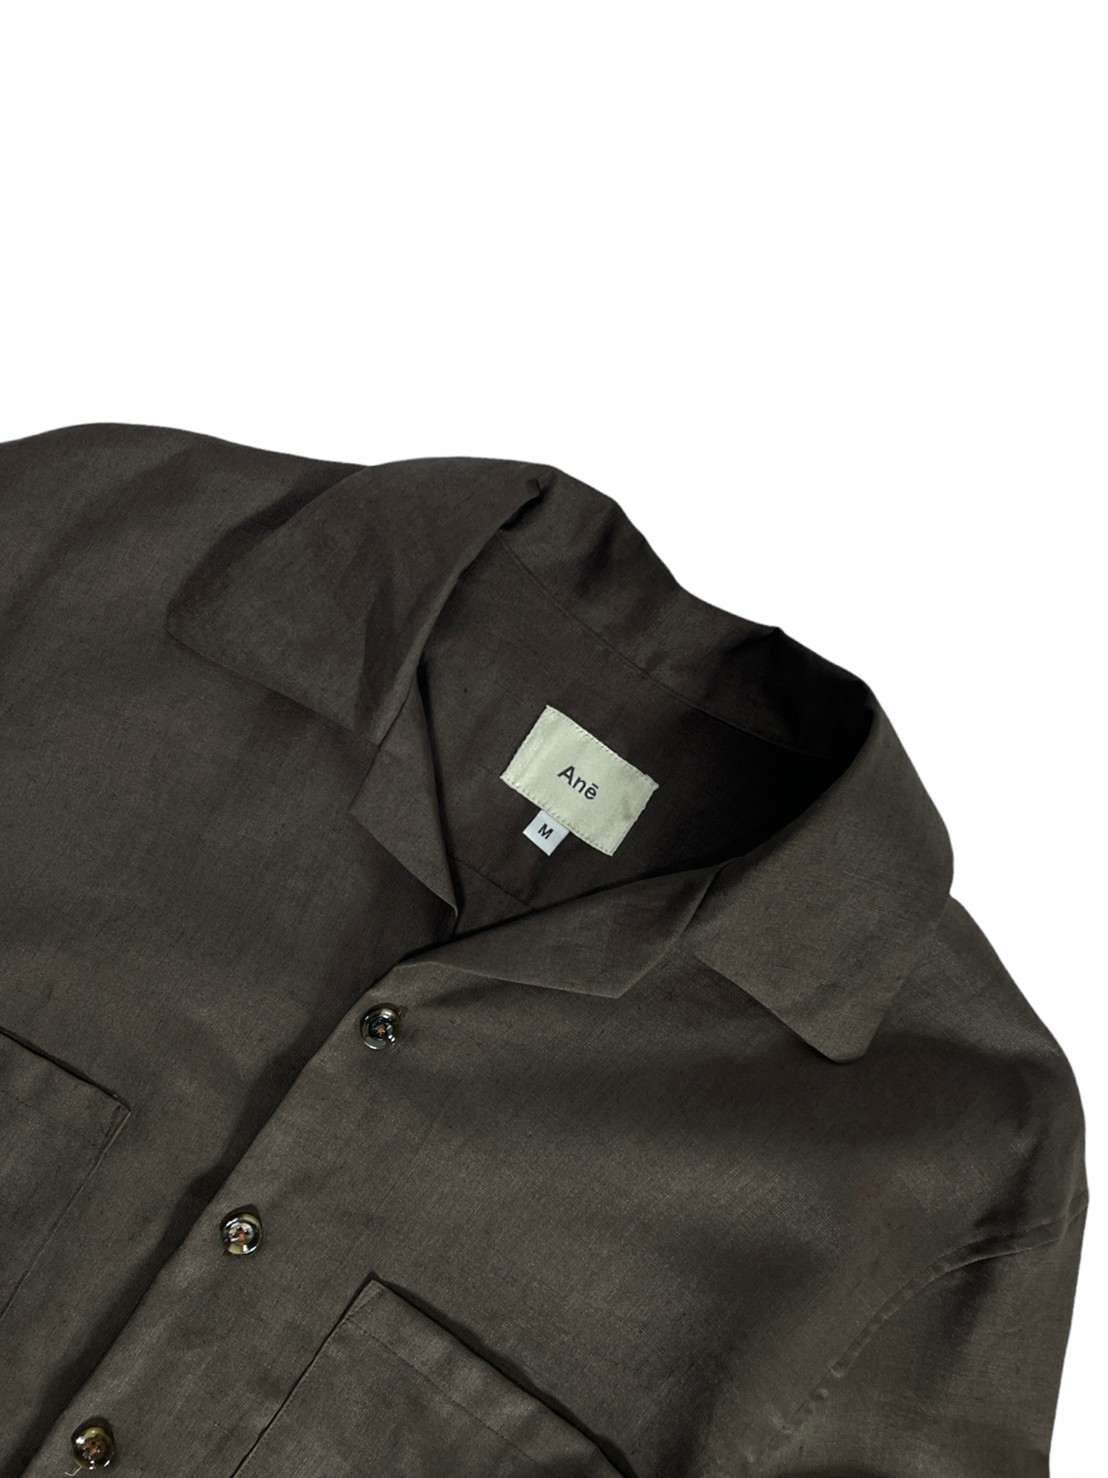 Ane Camp collar shirt (Dark brown linen)